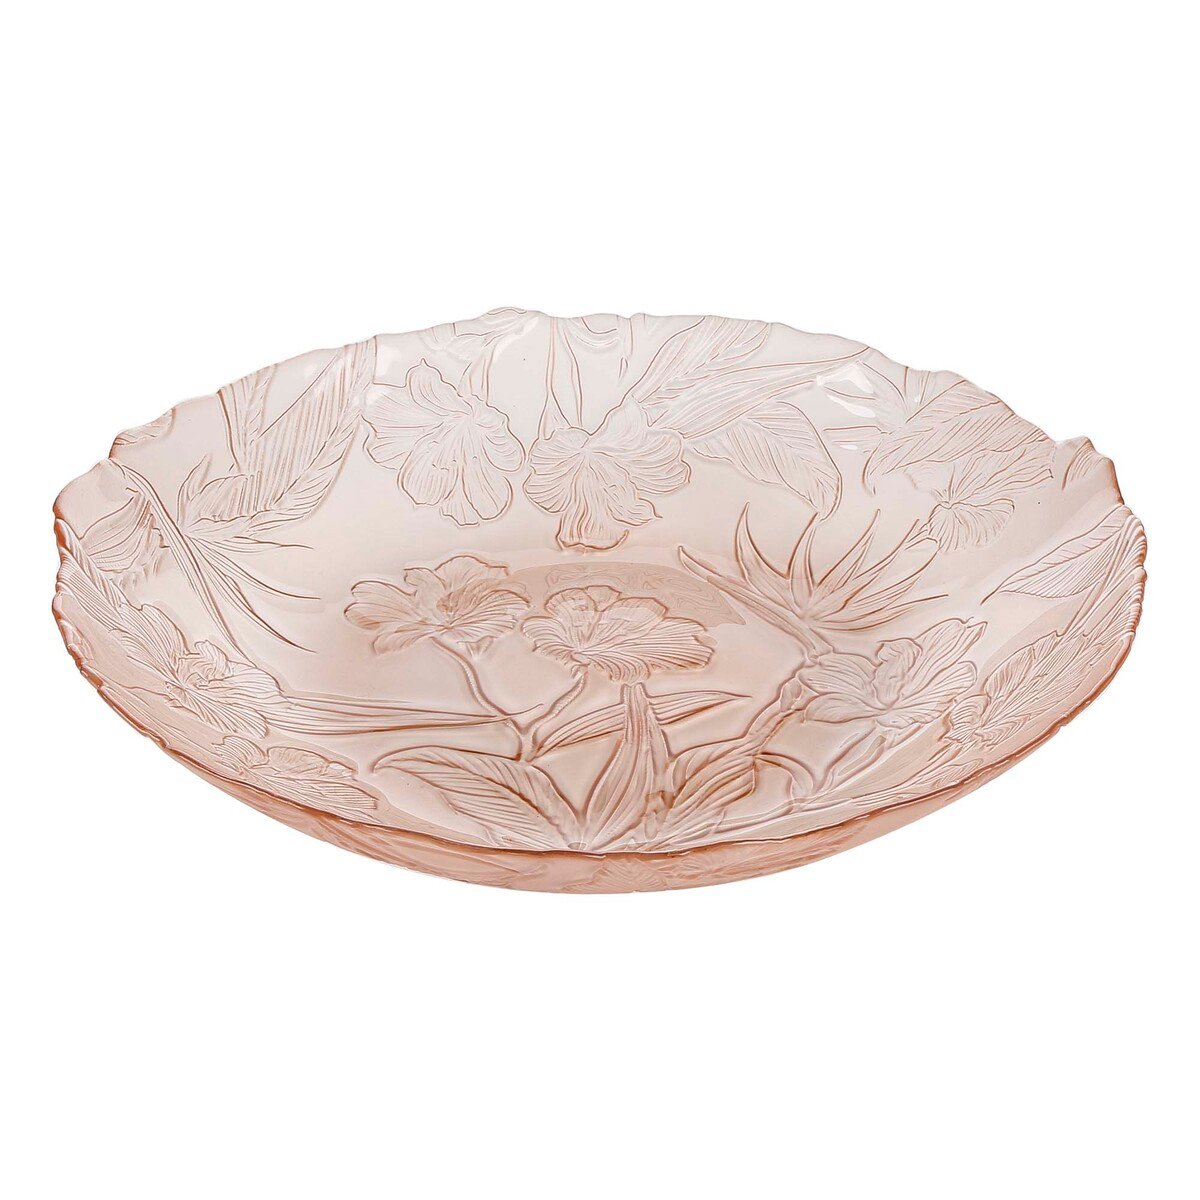 Glascom Decorative Glass Bowl, 30 cm, FV35